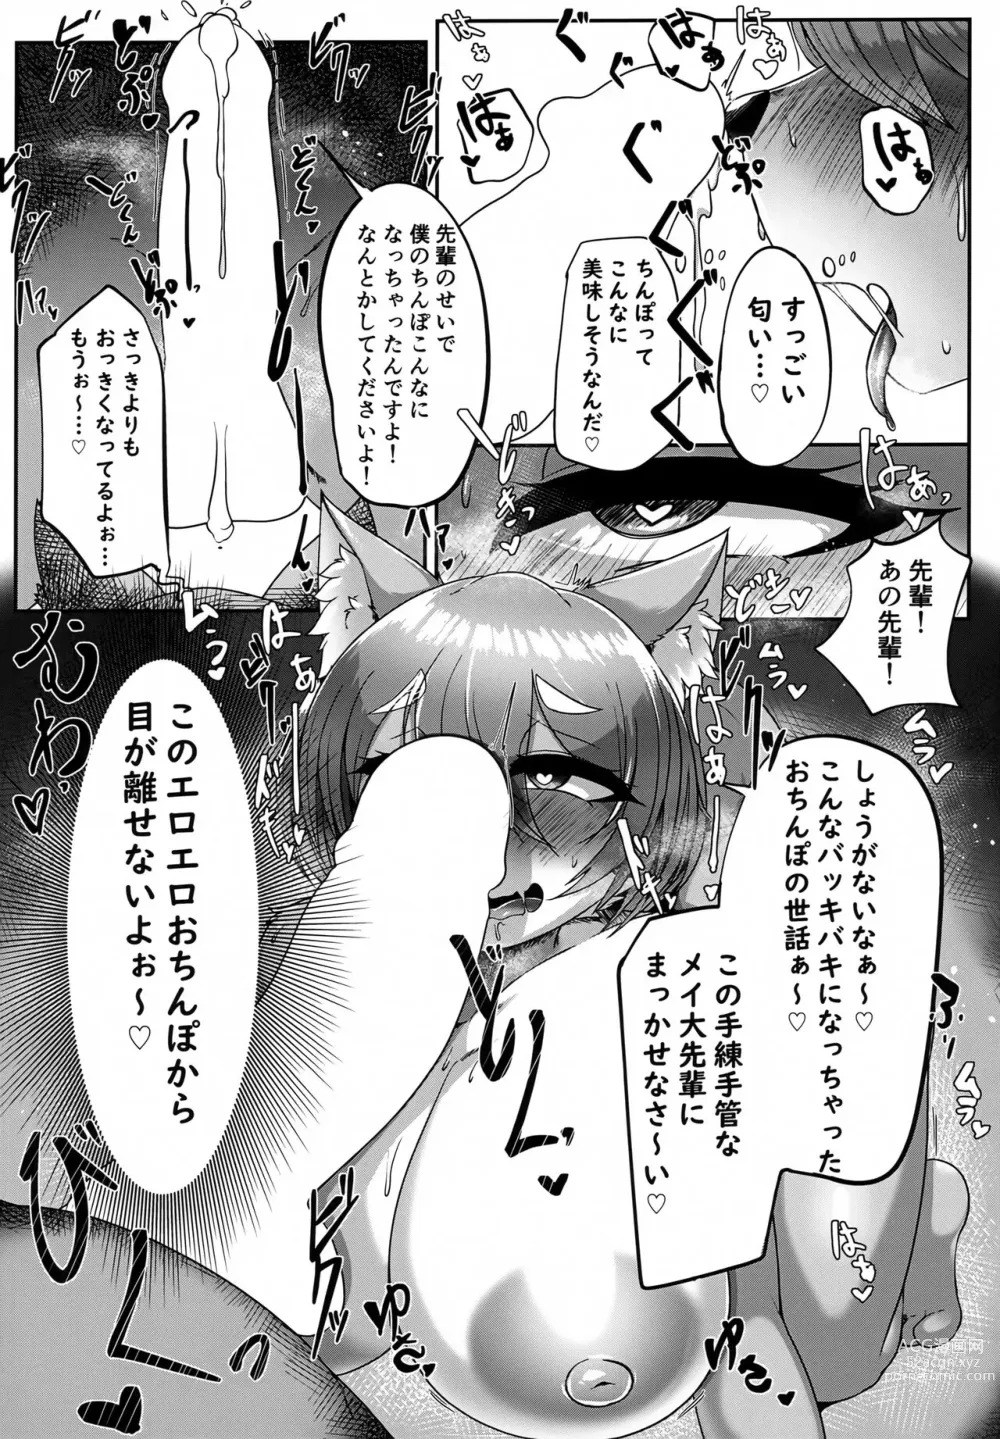 Page 8 of doujinshi Chotto Nuiteku?